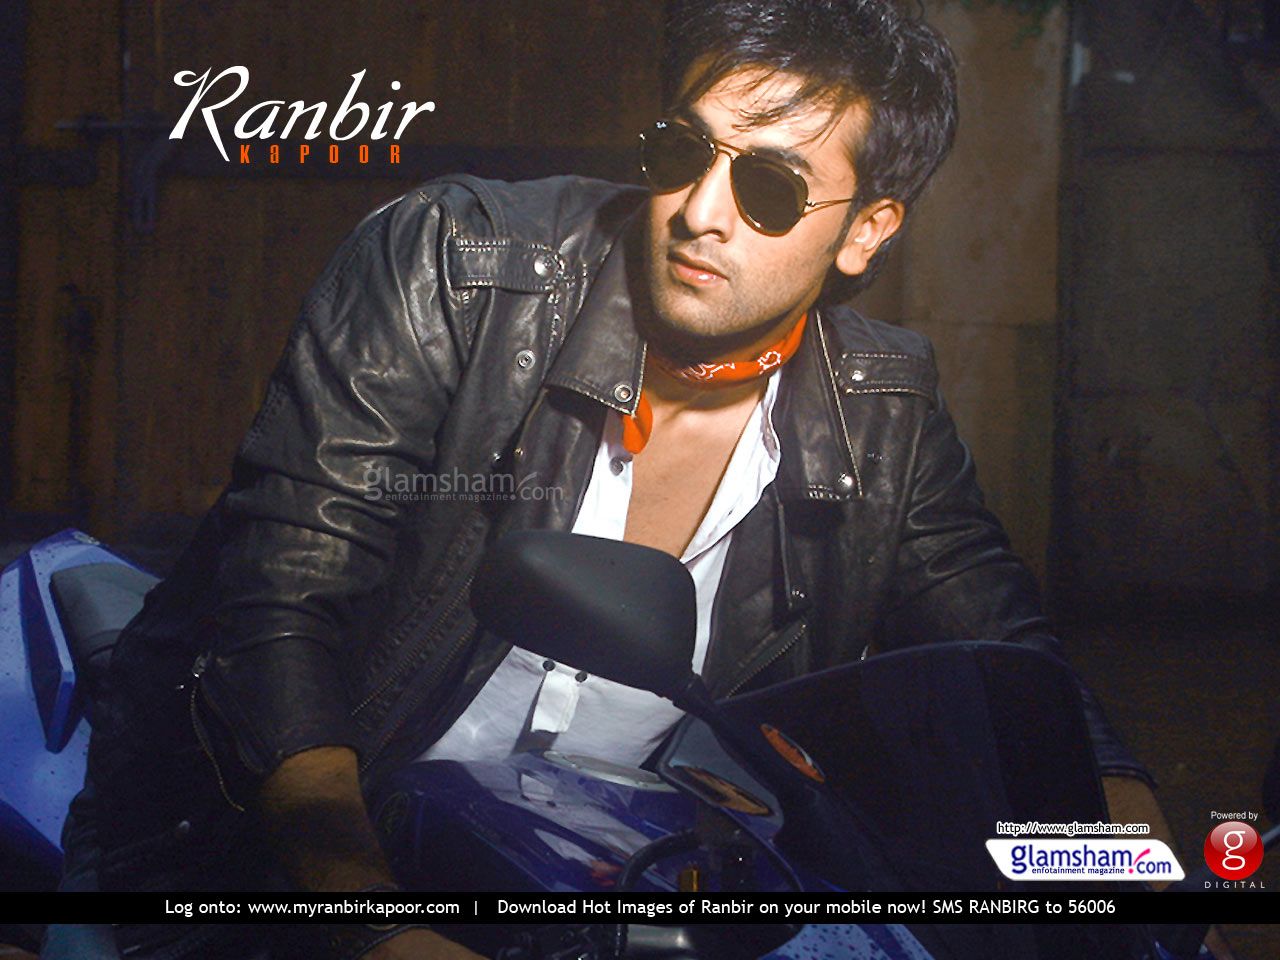 Ranbir Kapoor high resolution image 21904 - Glamsham.